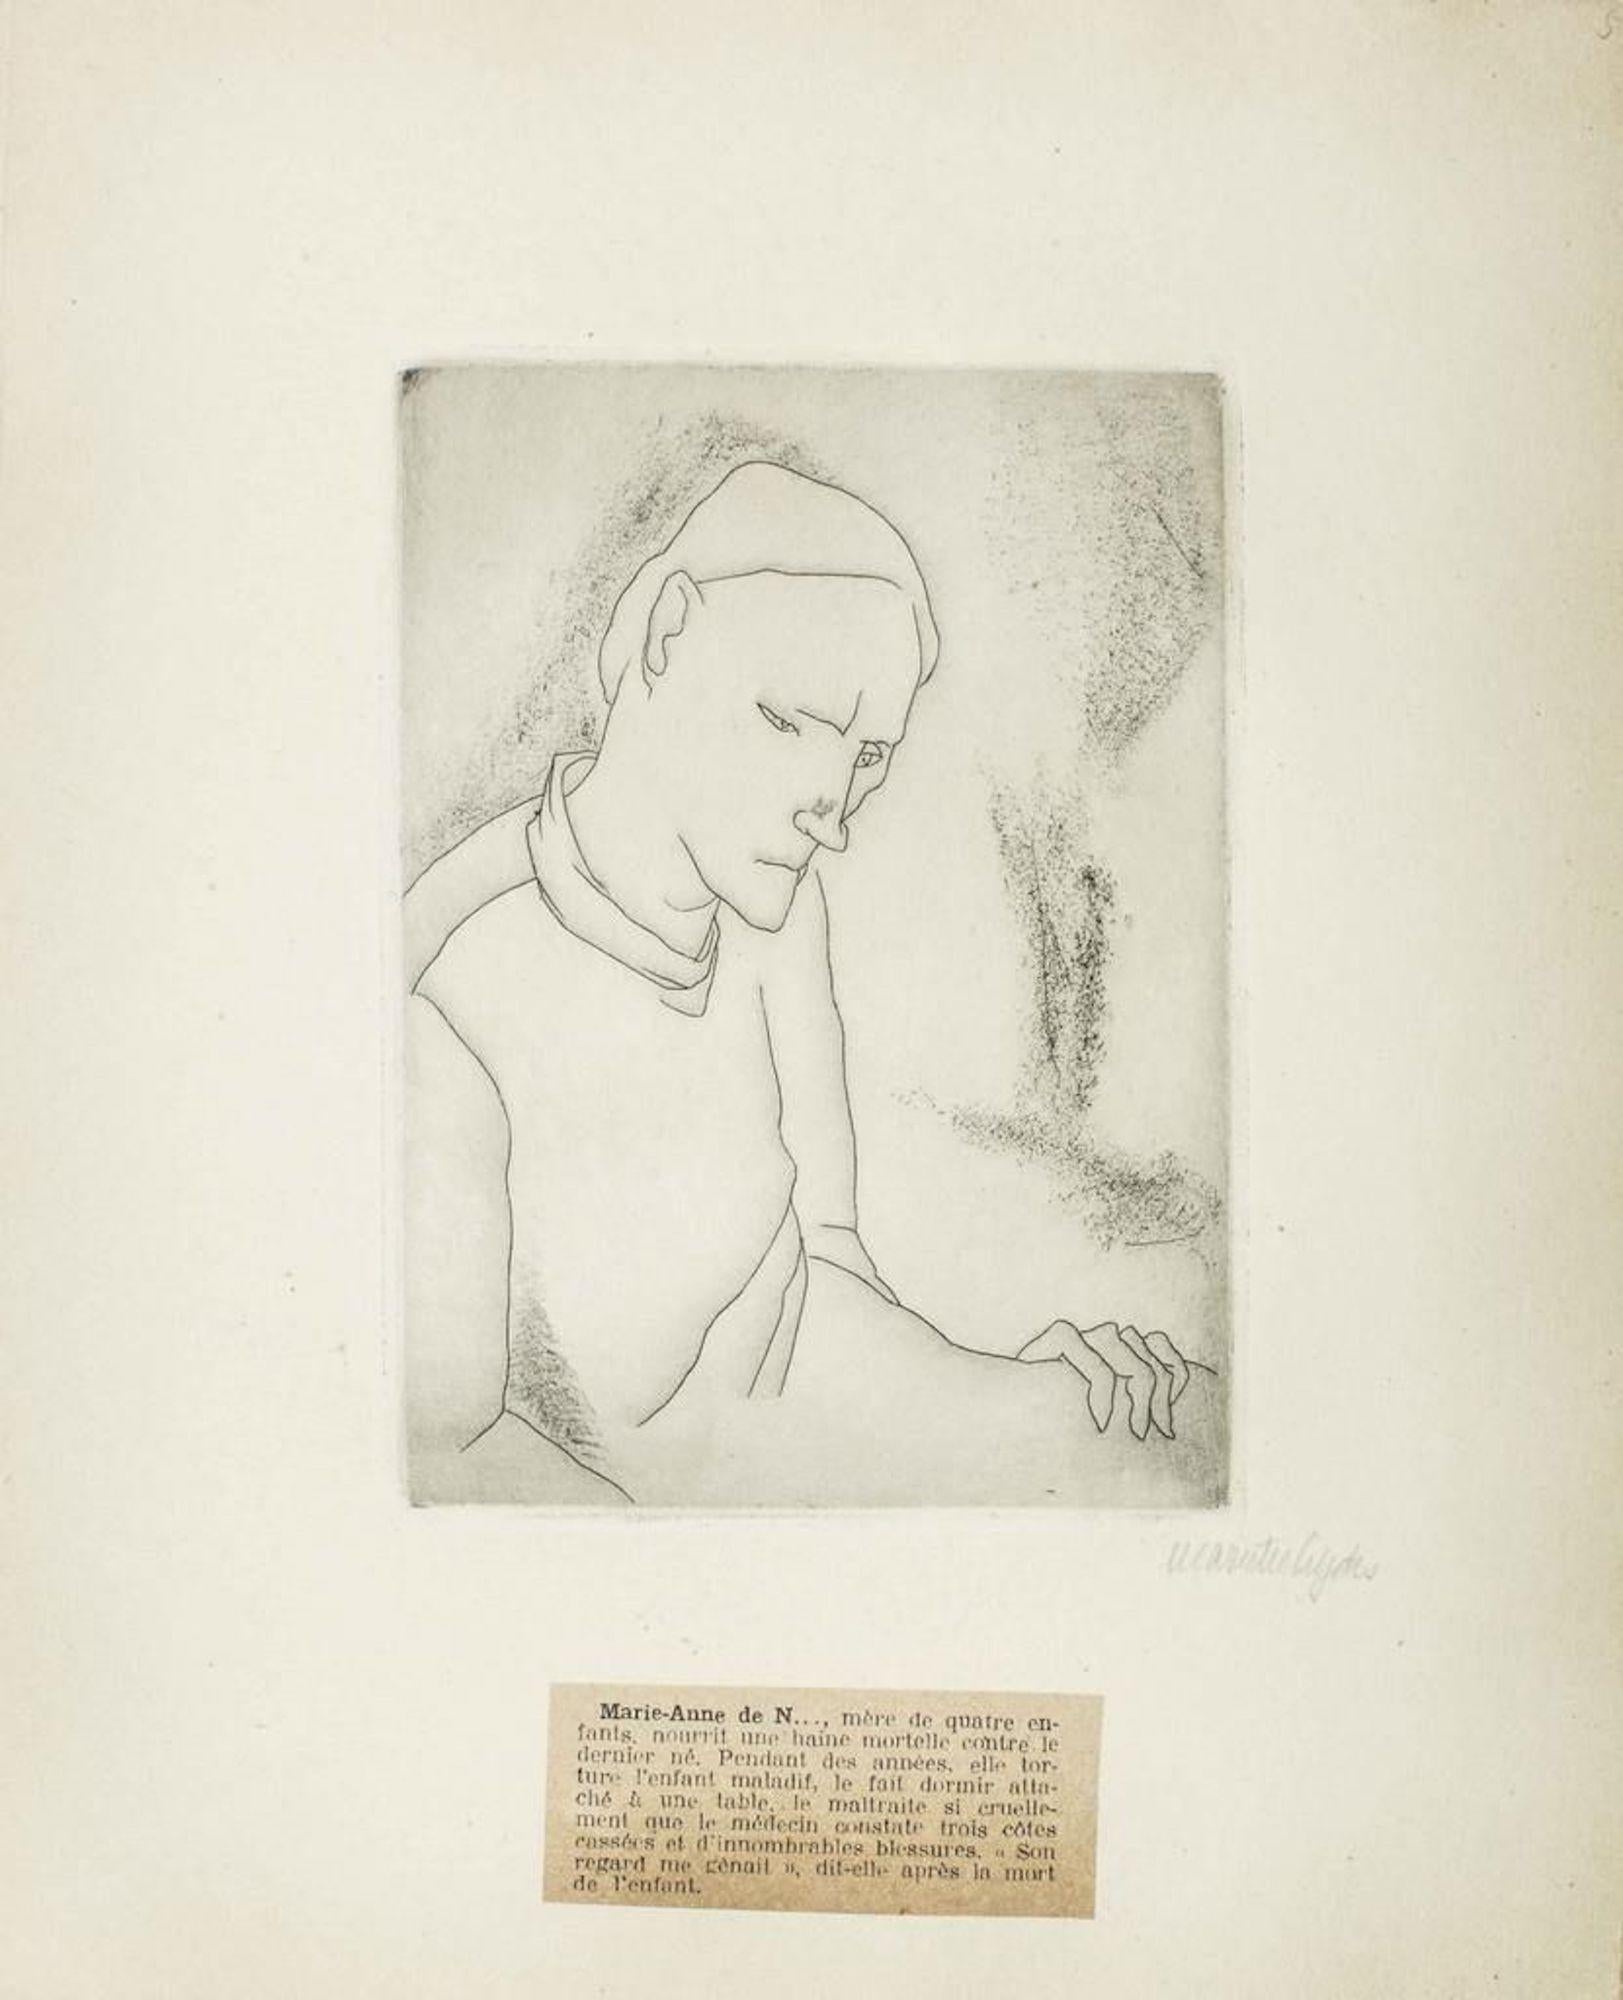 Mariette Lydis Figurative Print - Portrait of Marie-Anne de N. - Original Etching by M. Lydis - 1927